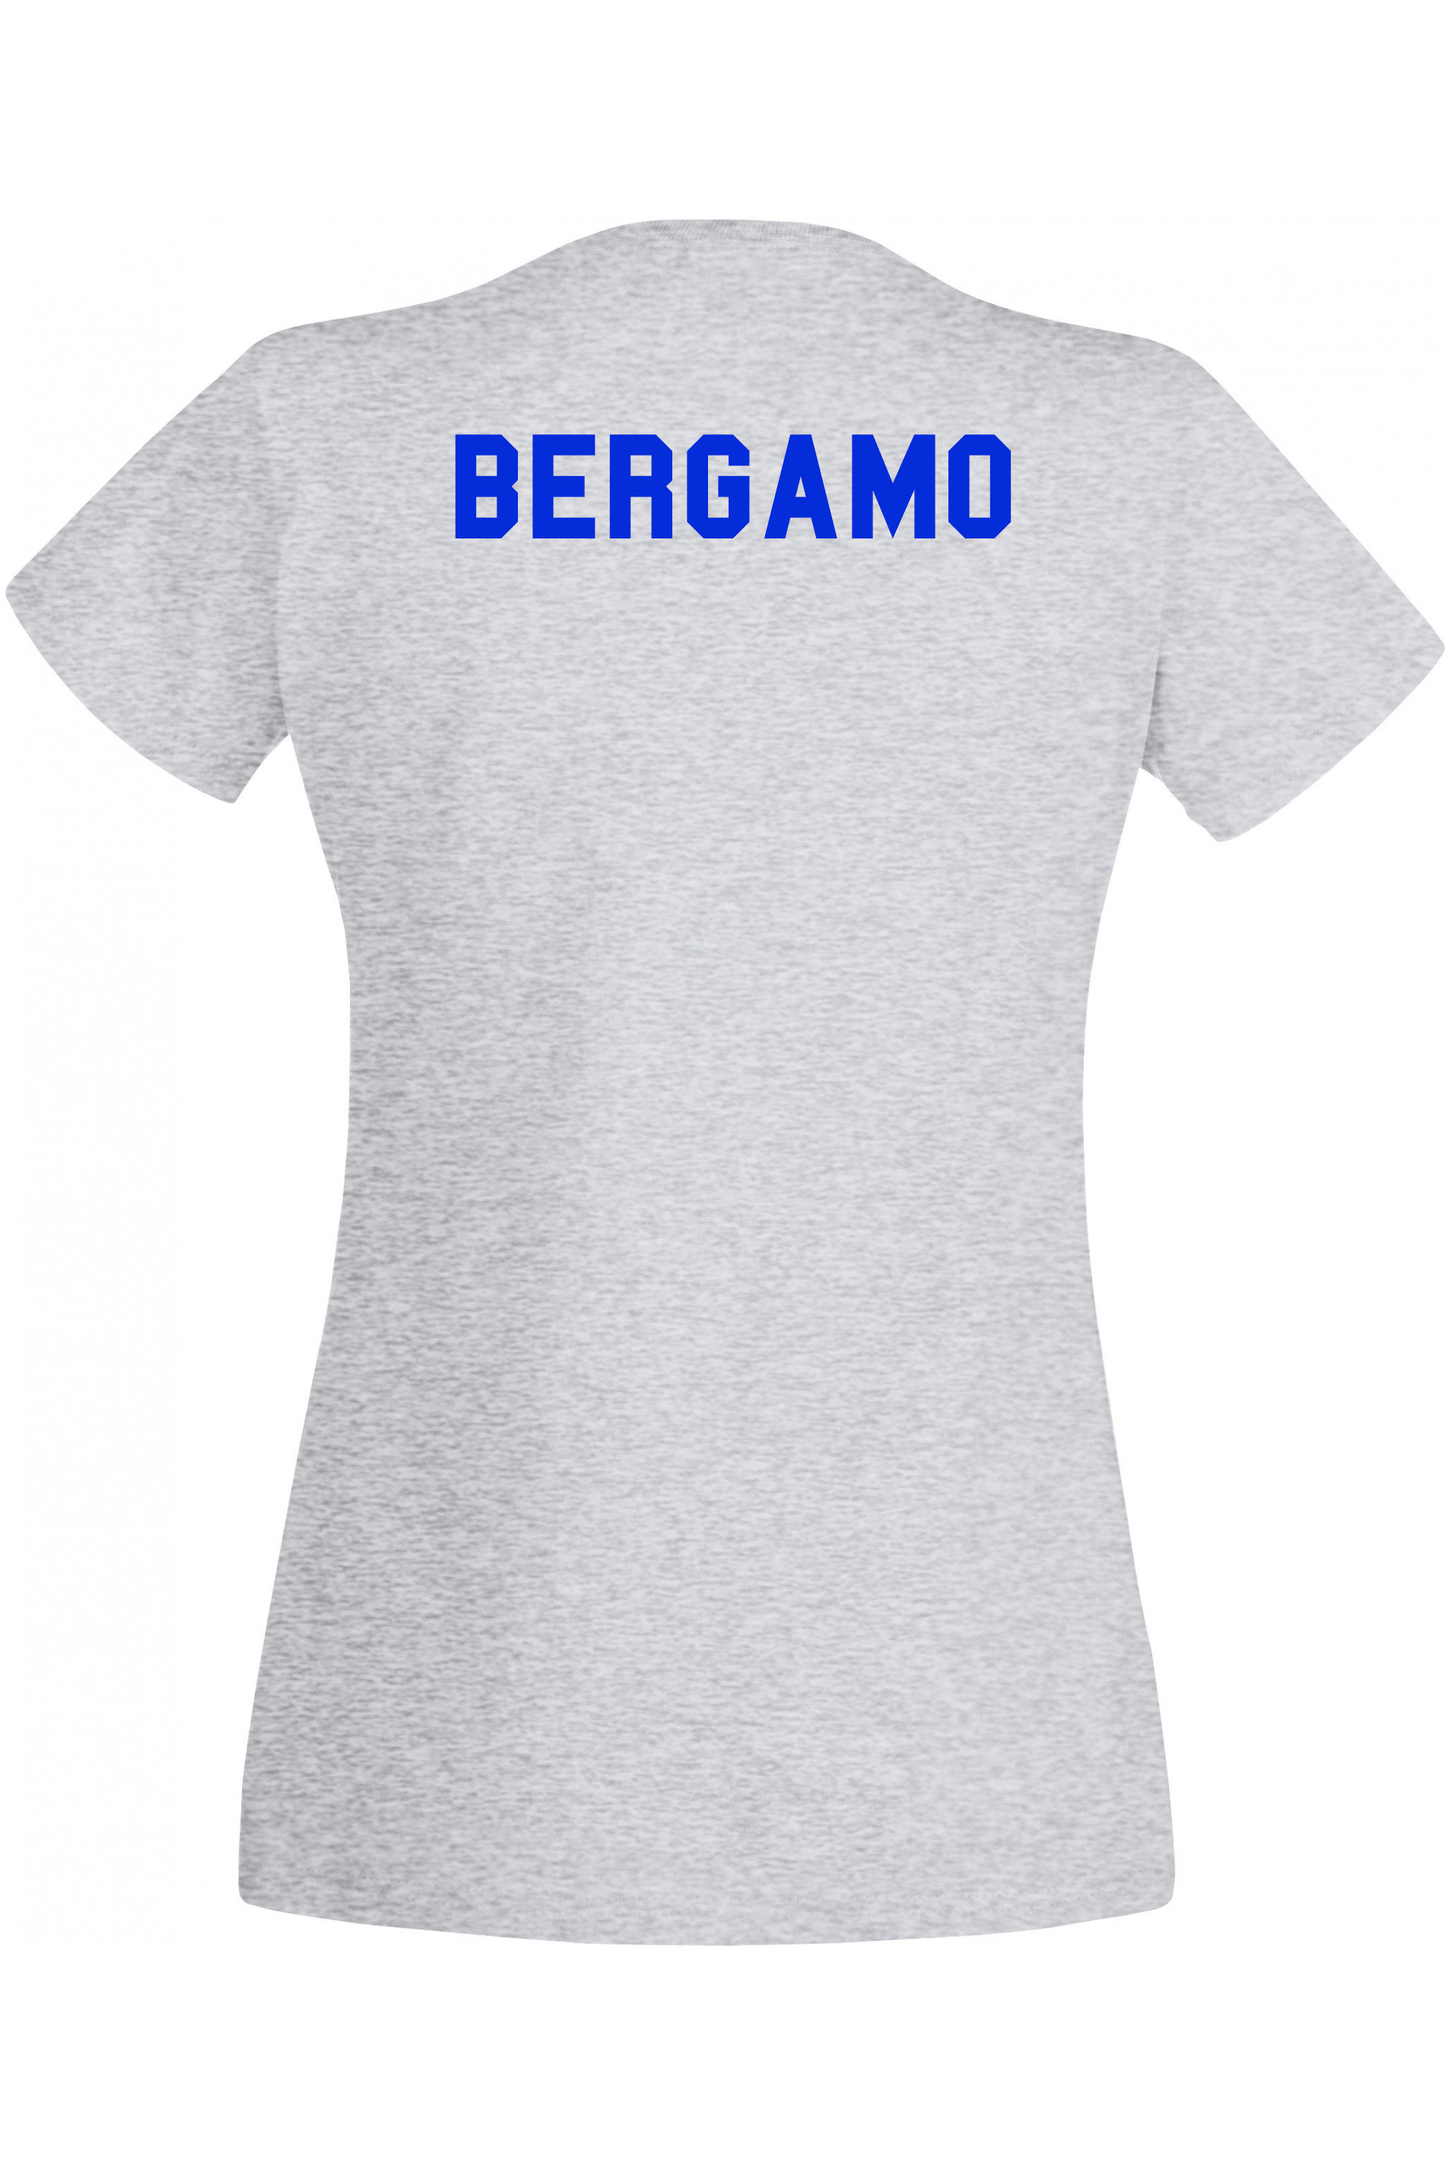 Ginnastica Bergamo T-Shirt Bianca/Grigia